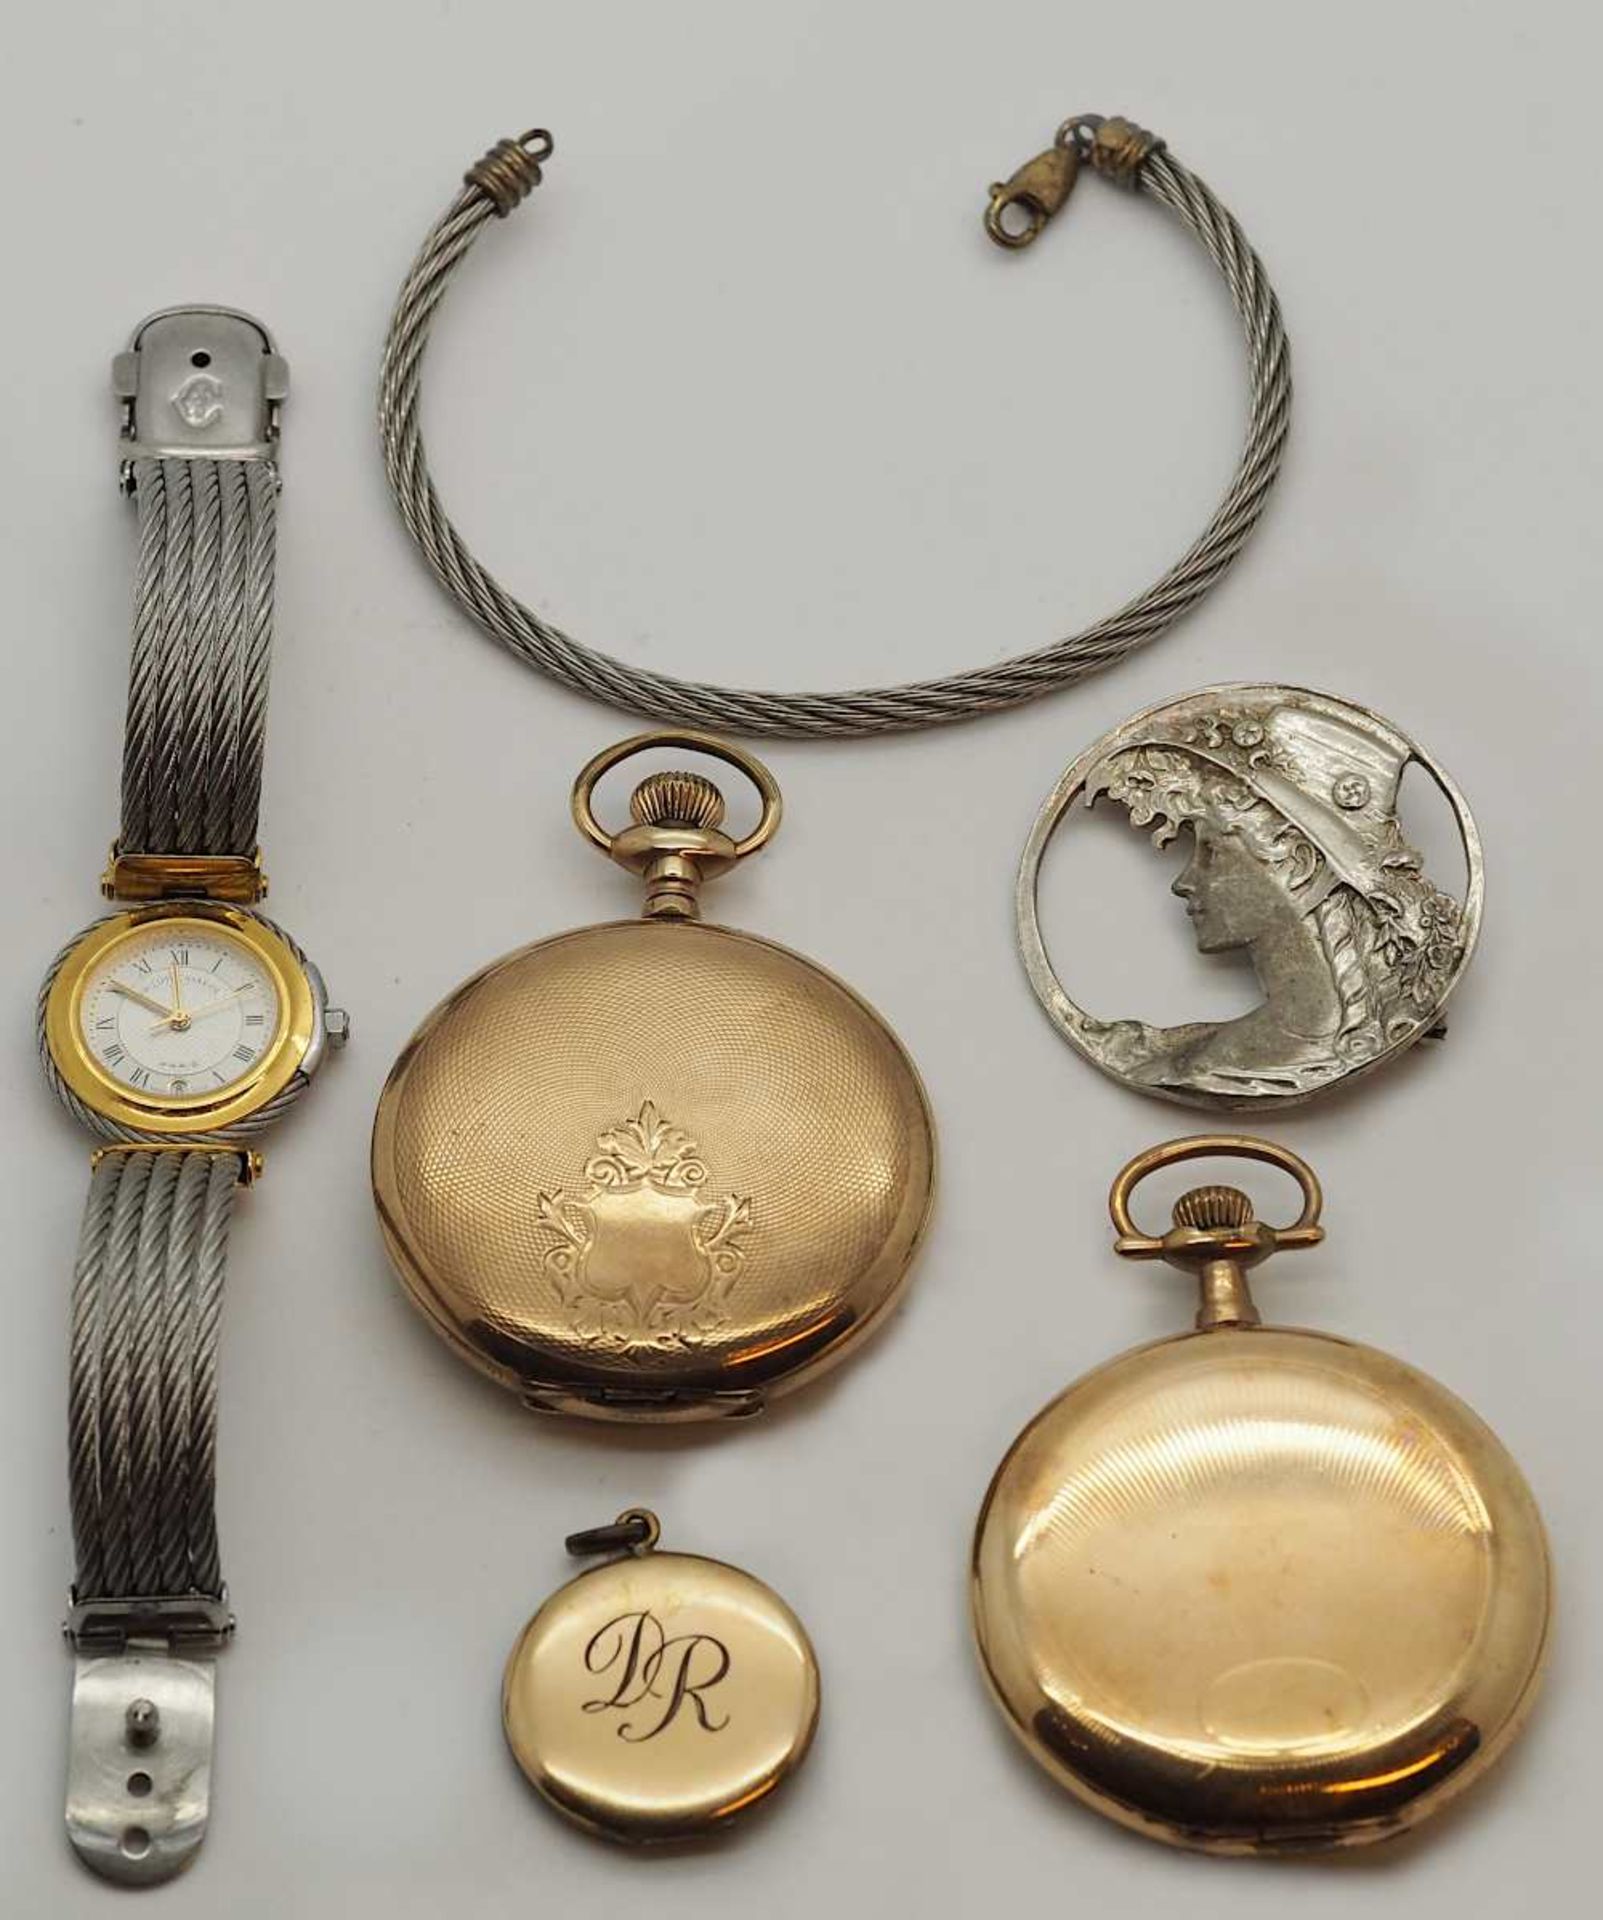 2 Taschenuhren verg. z.T. besch. sowie 1 Armbanduhr P. CHARRIOL Quartz sowie min. Schmuck u.a.</